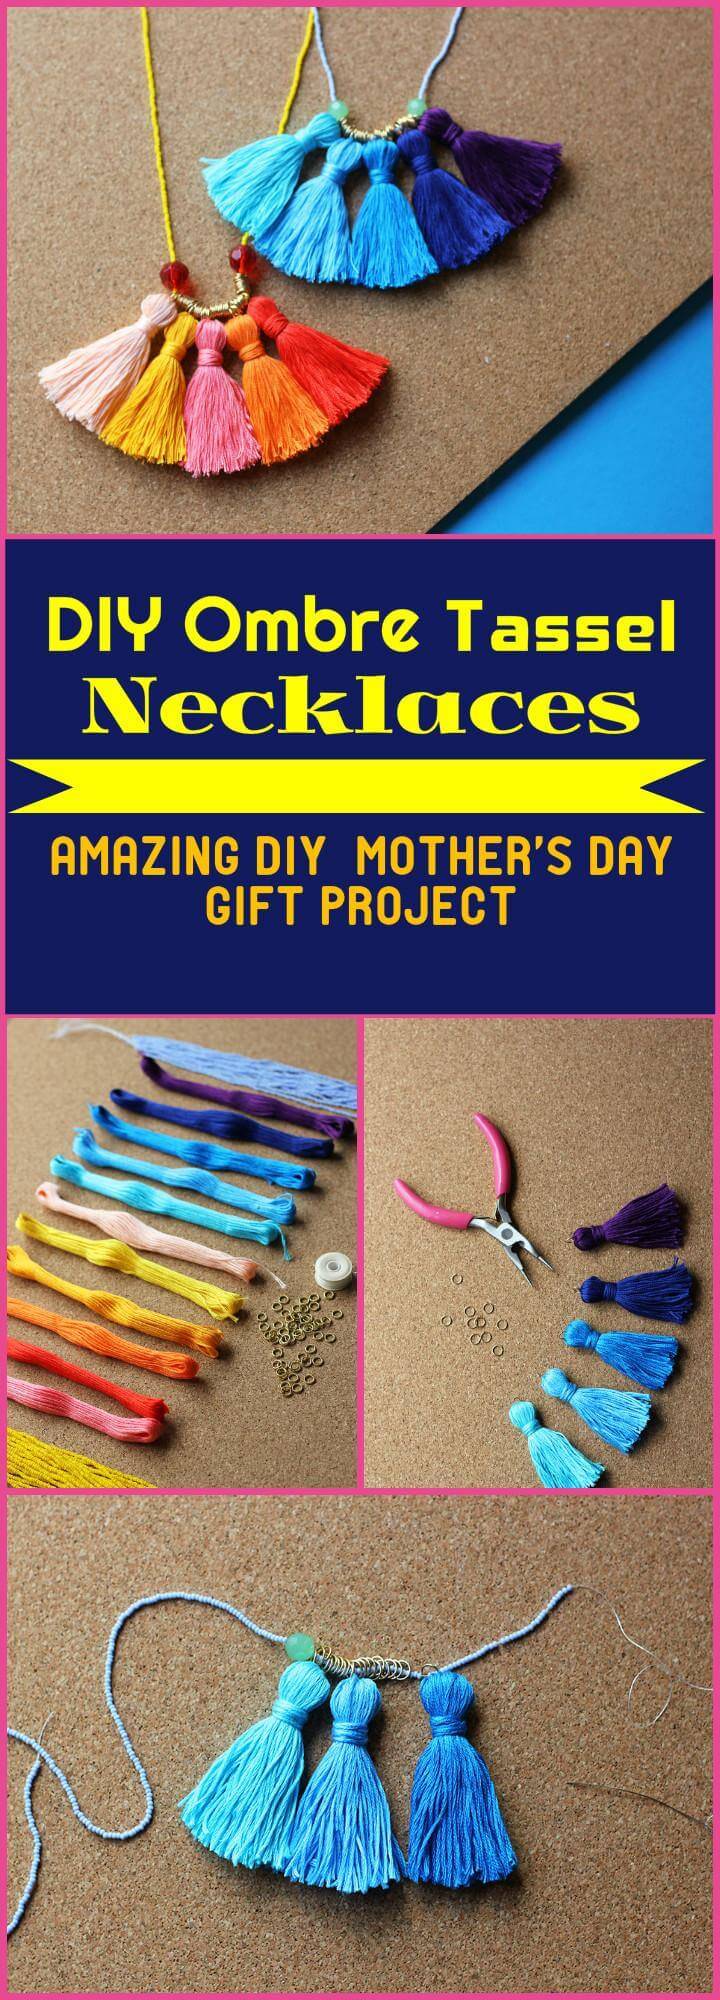 DIY handmade Ombre Tassel Necklaces